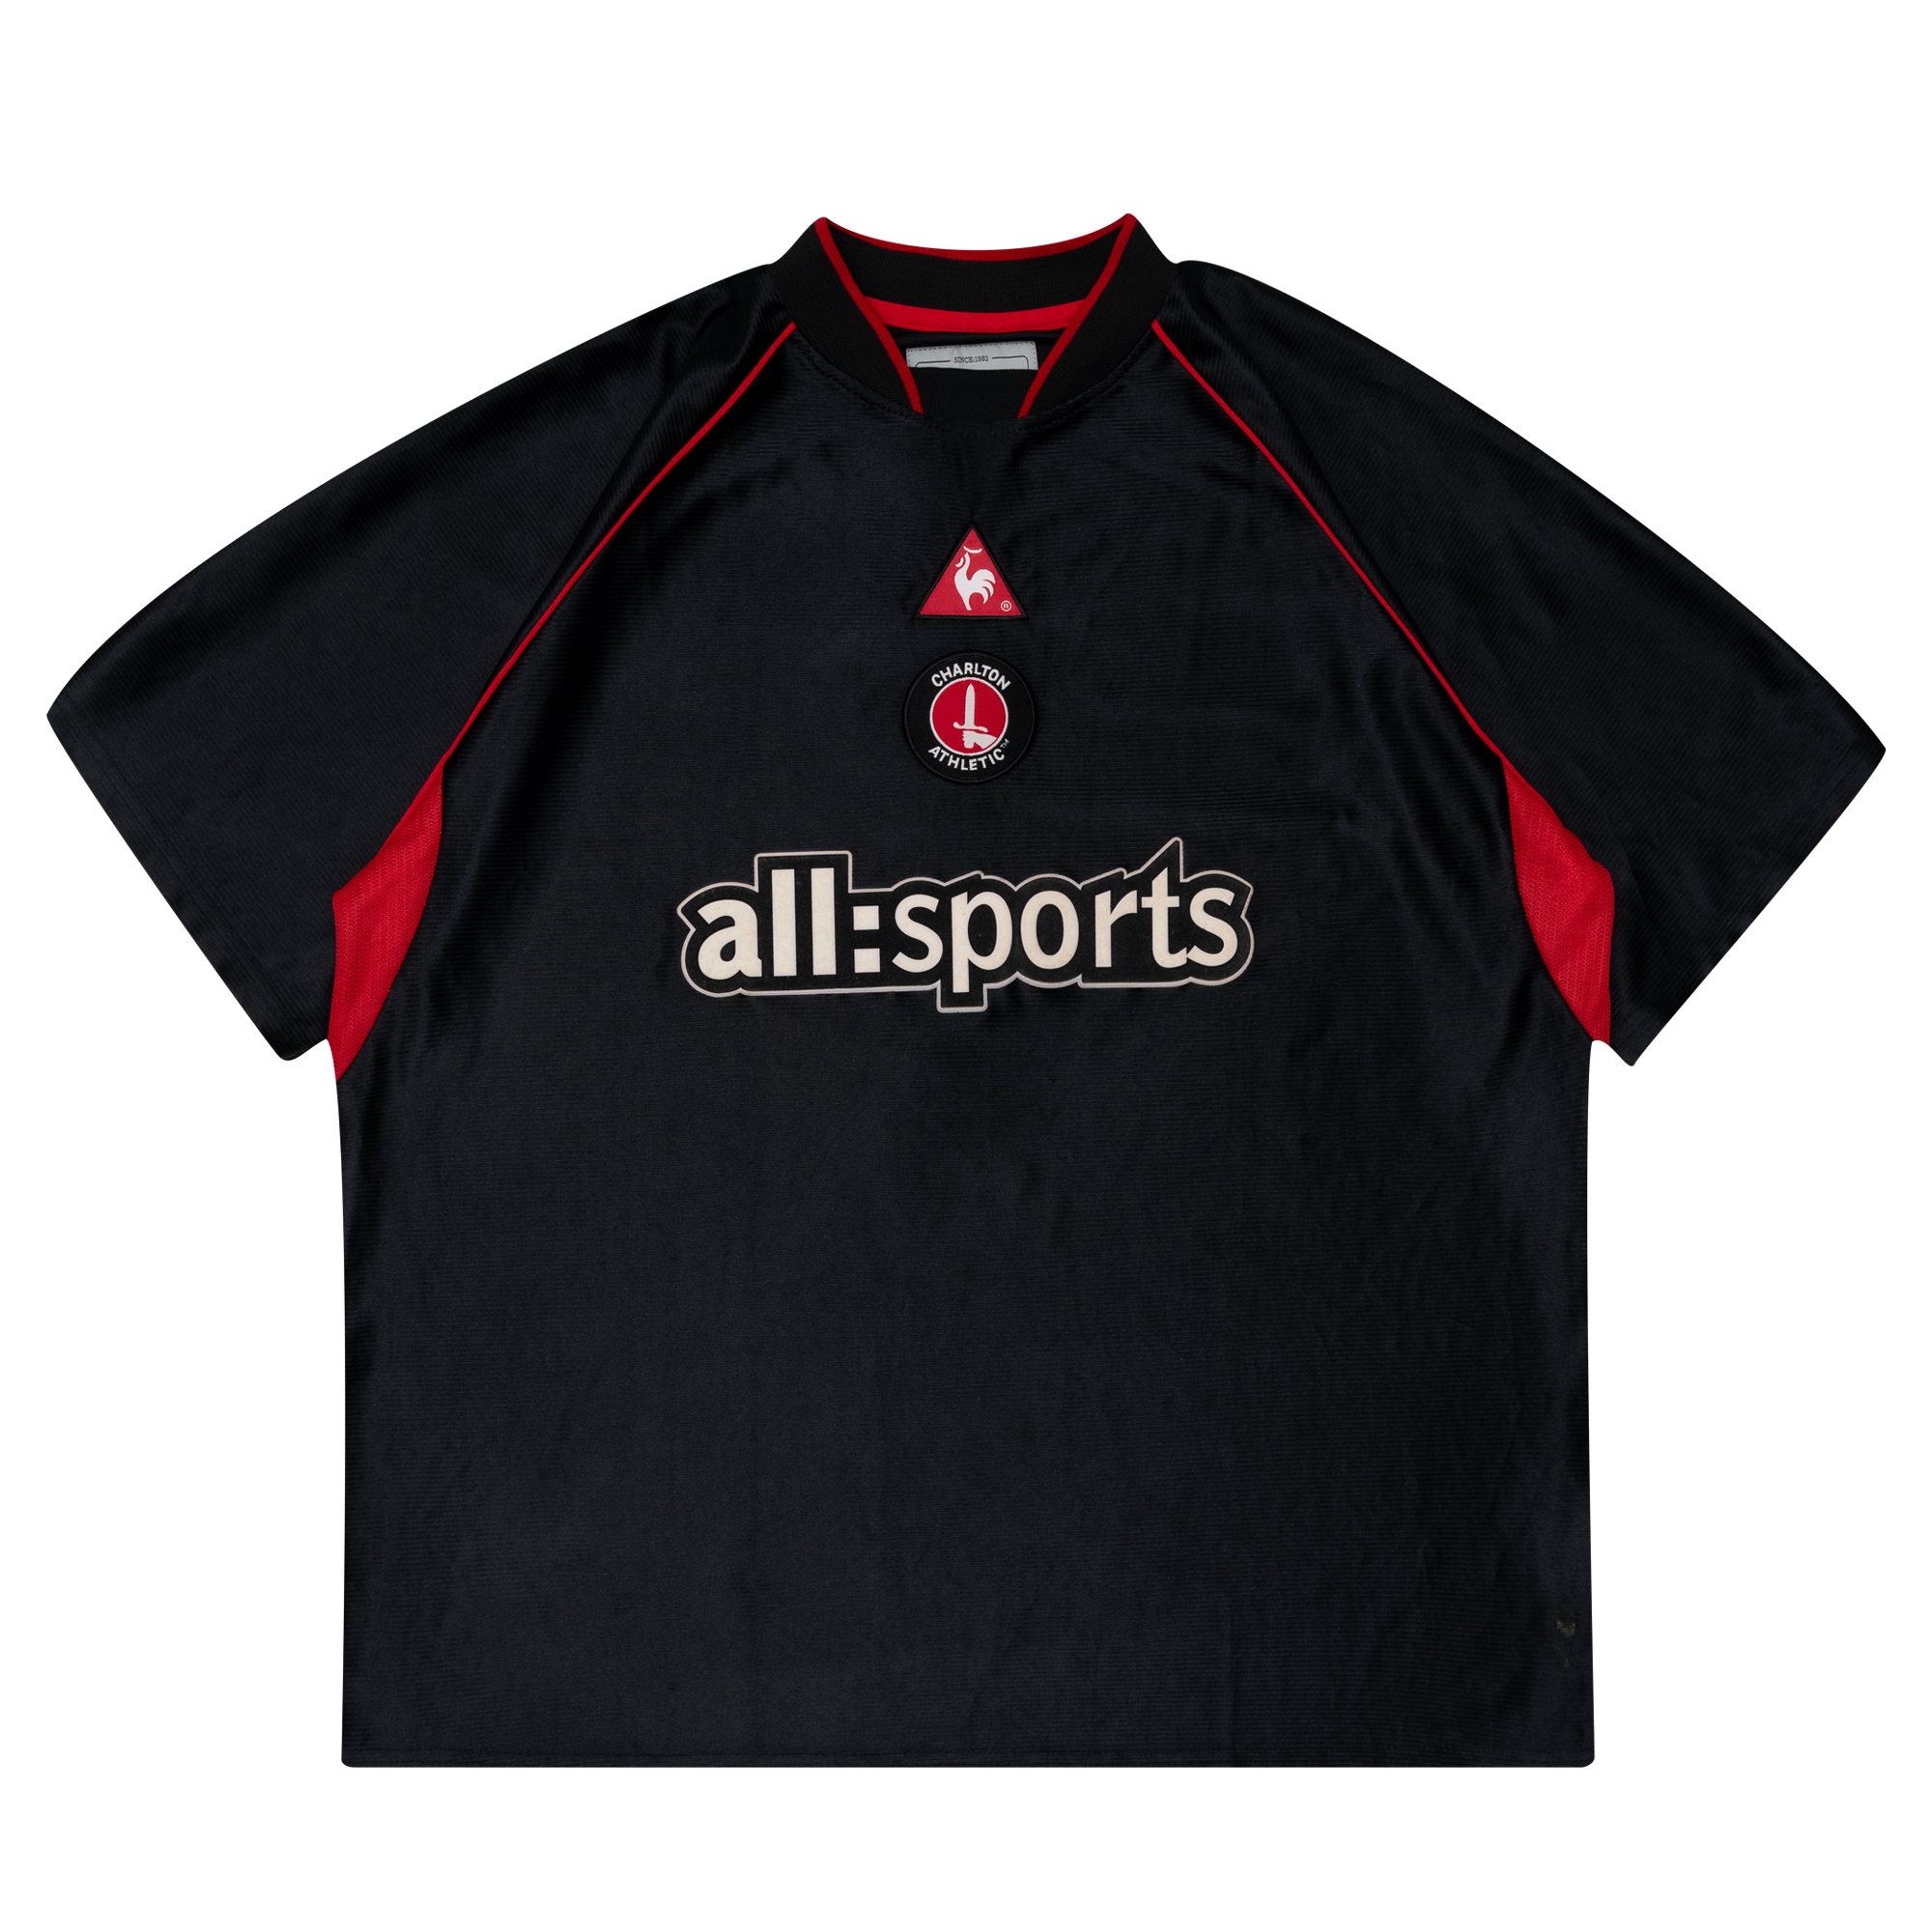 Team Charlton Athletic Football Club All Sports Soccer Jersey Black-PLUS